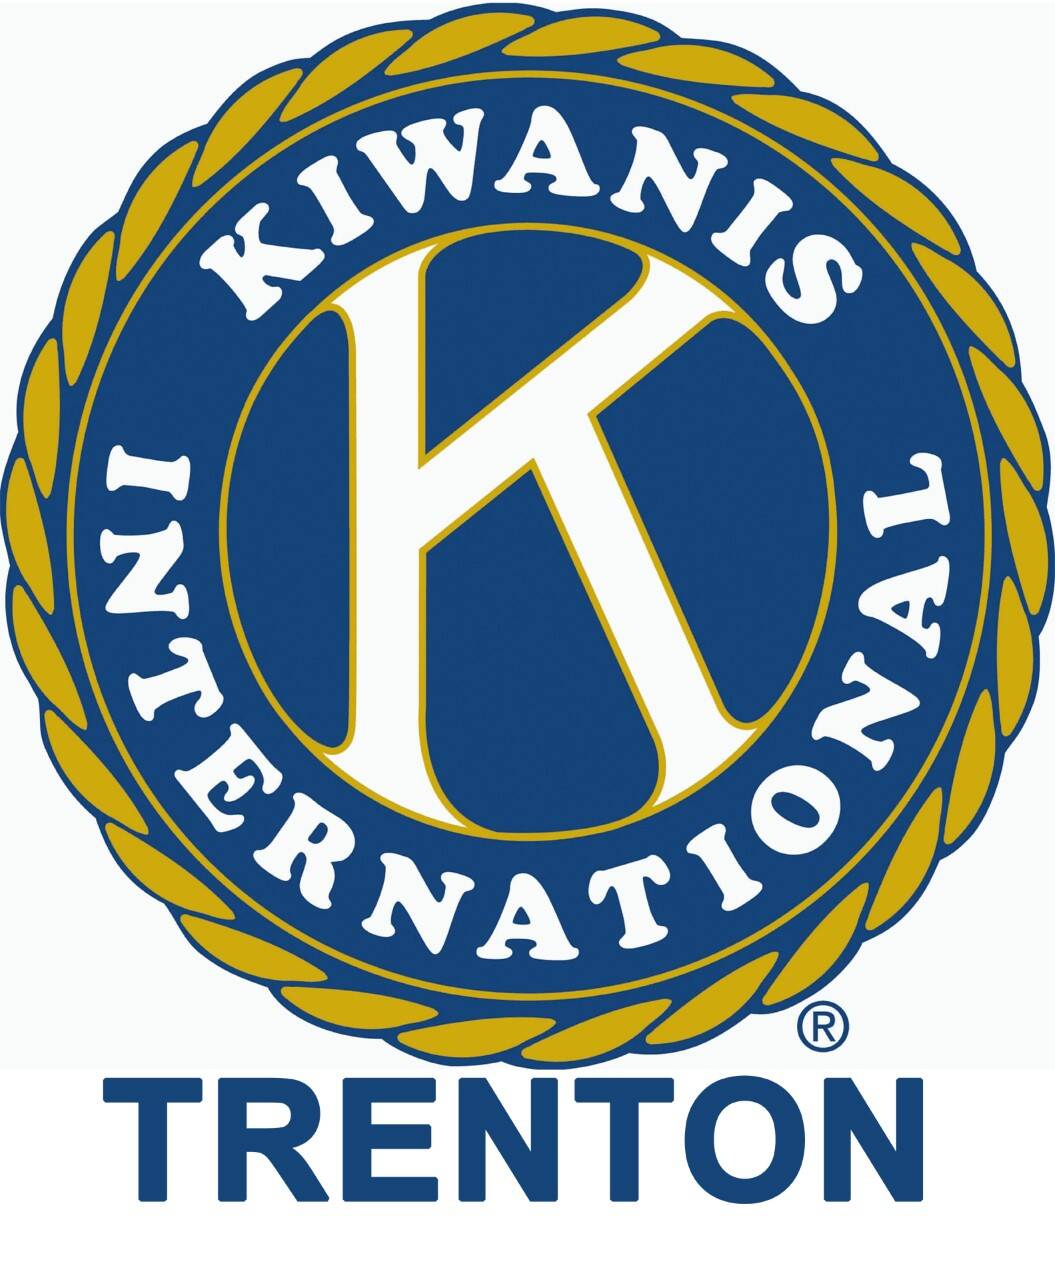 The Kiwanis Club of Trenton